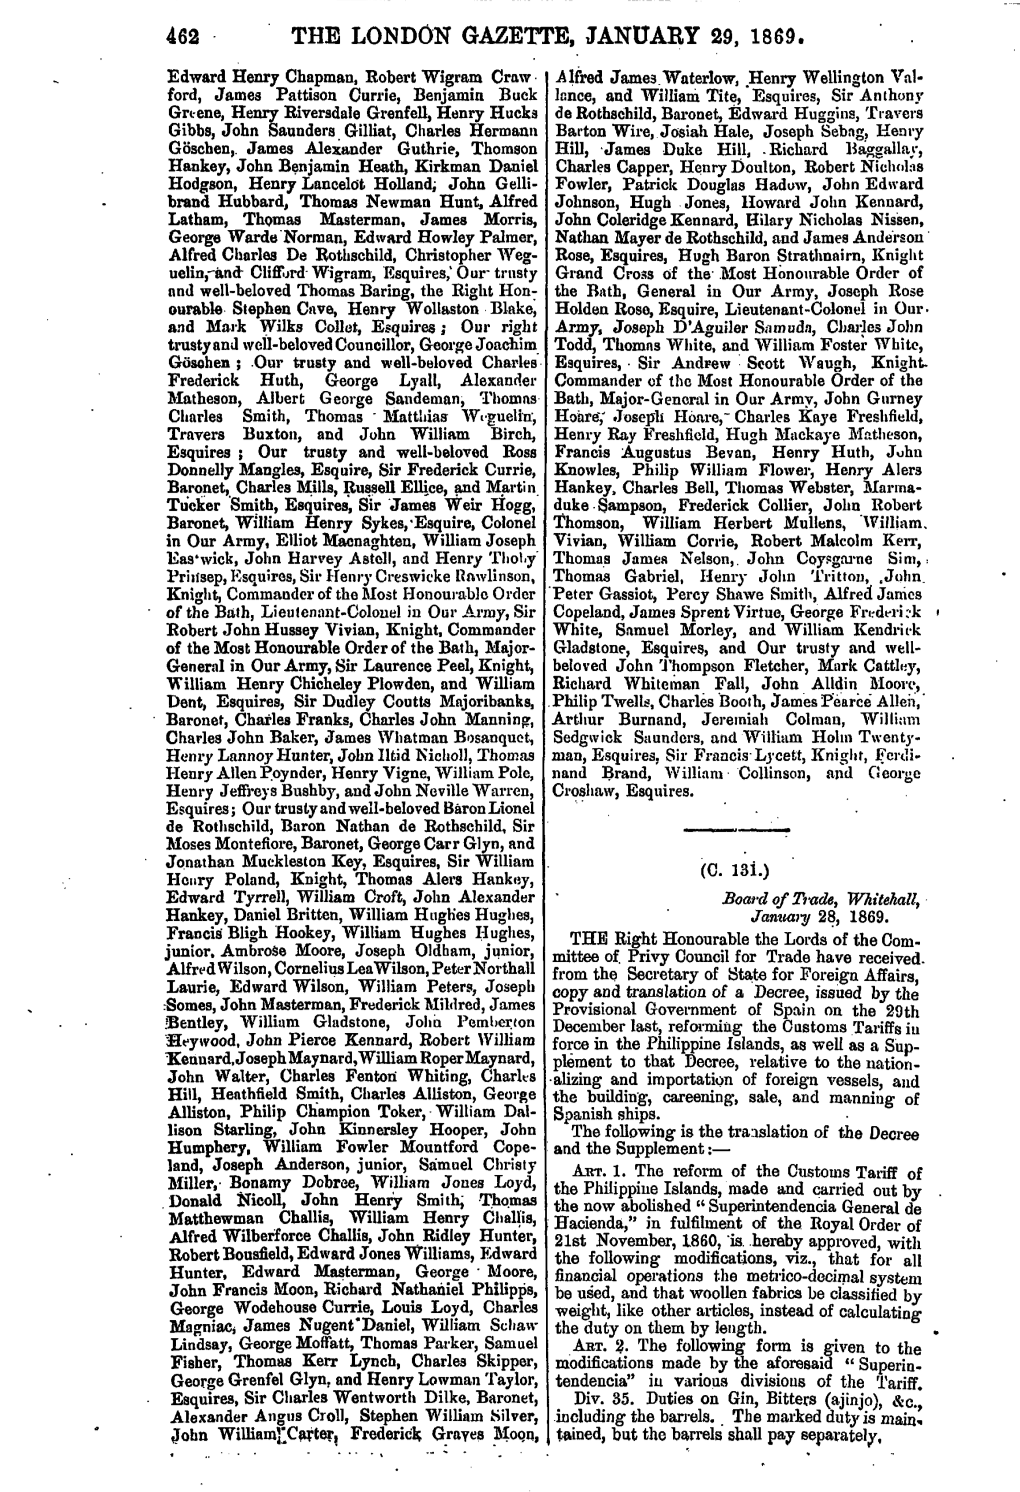 The London Gazette, Januaey 29, 1869